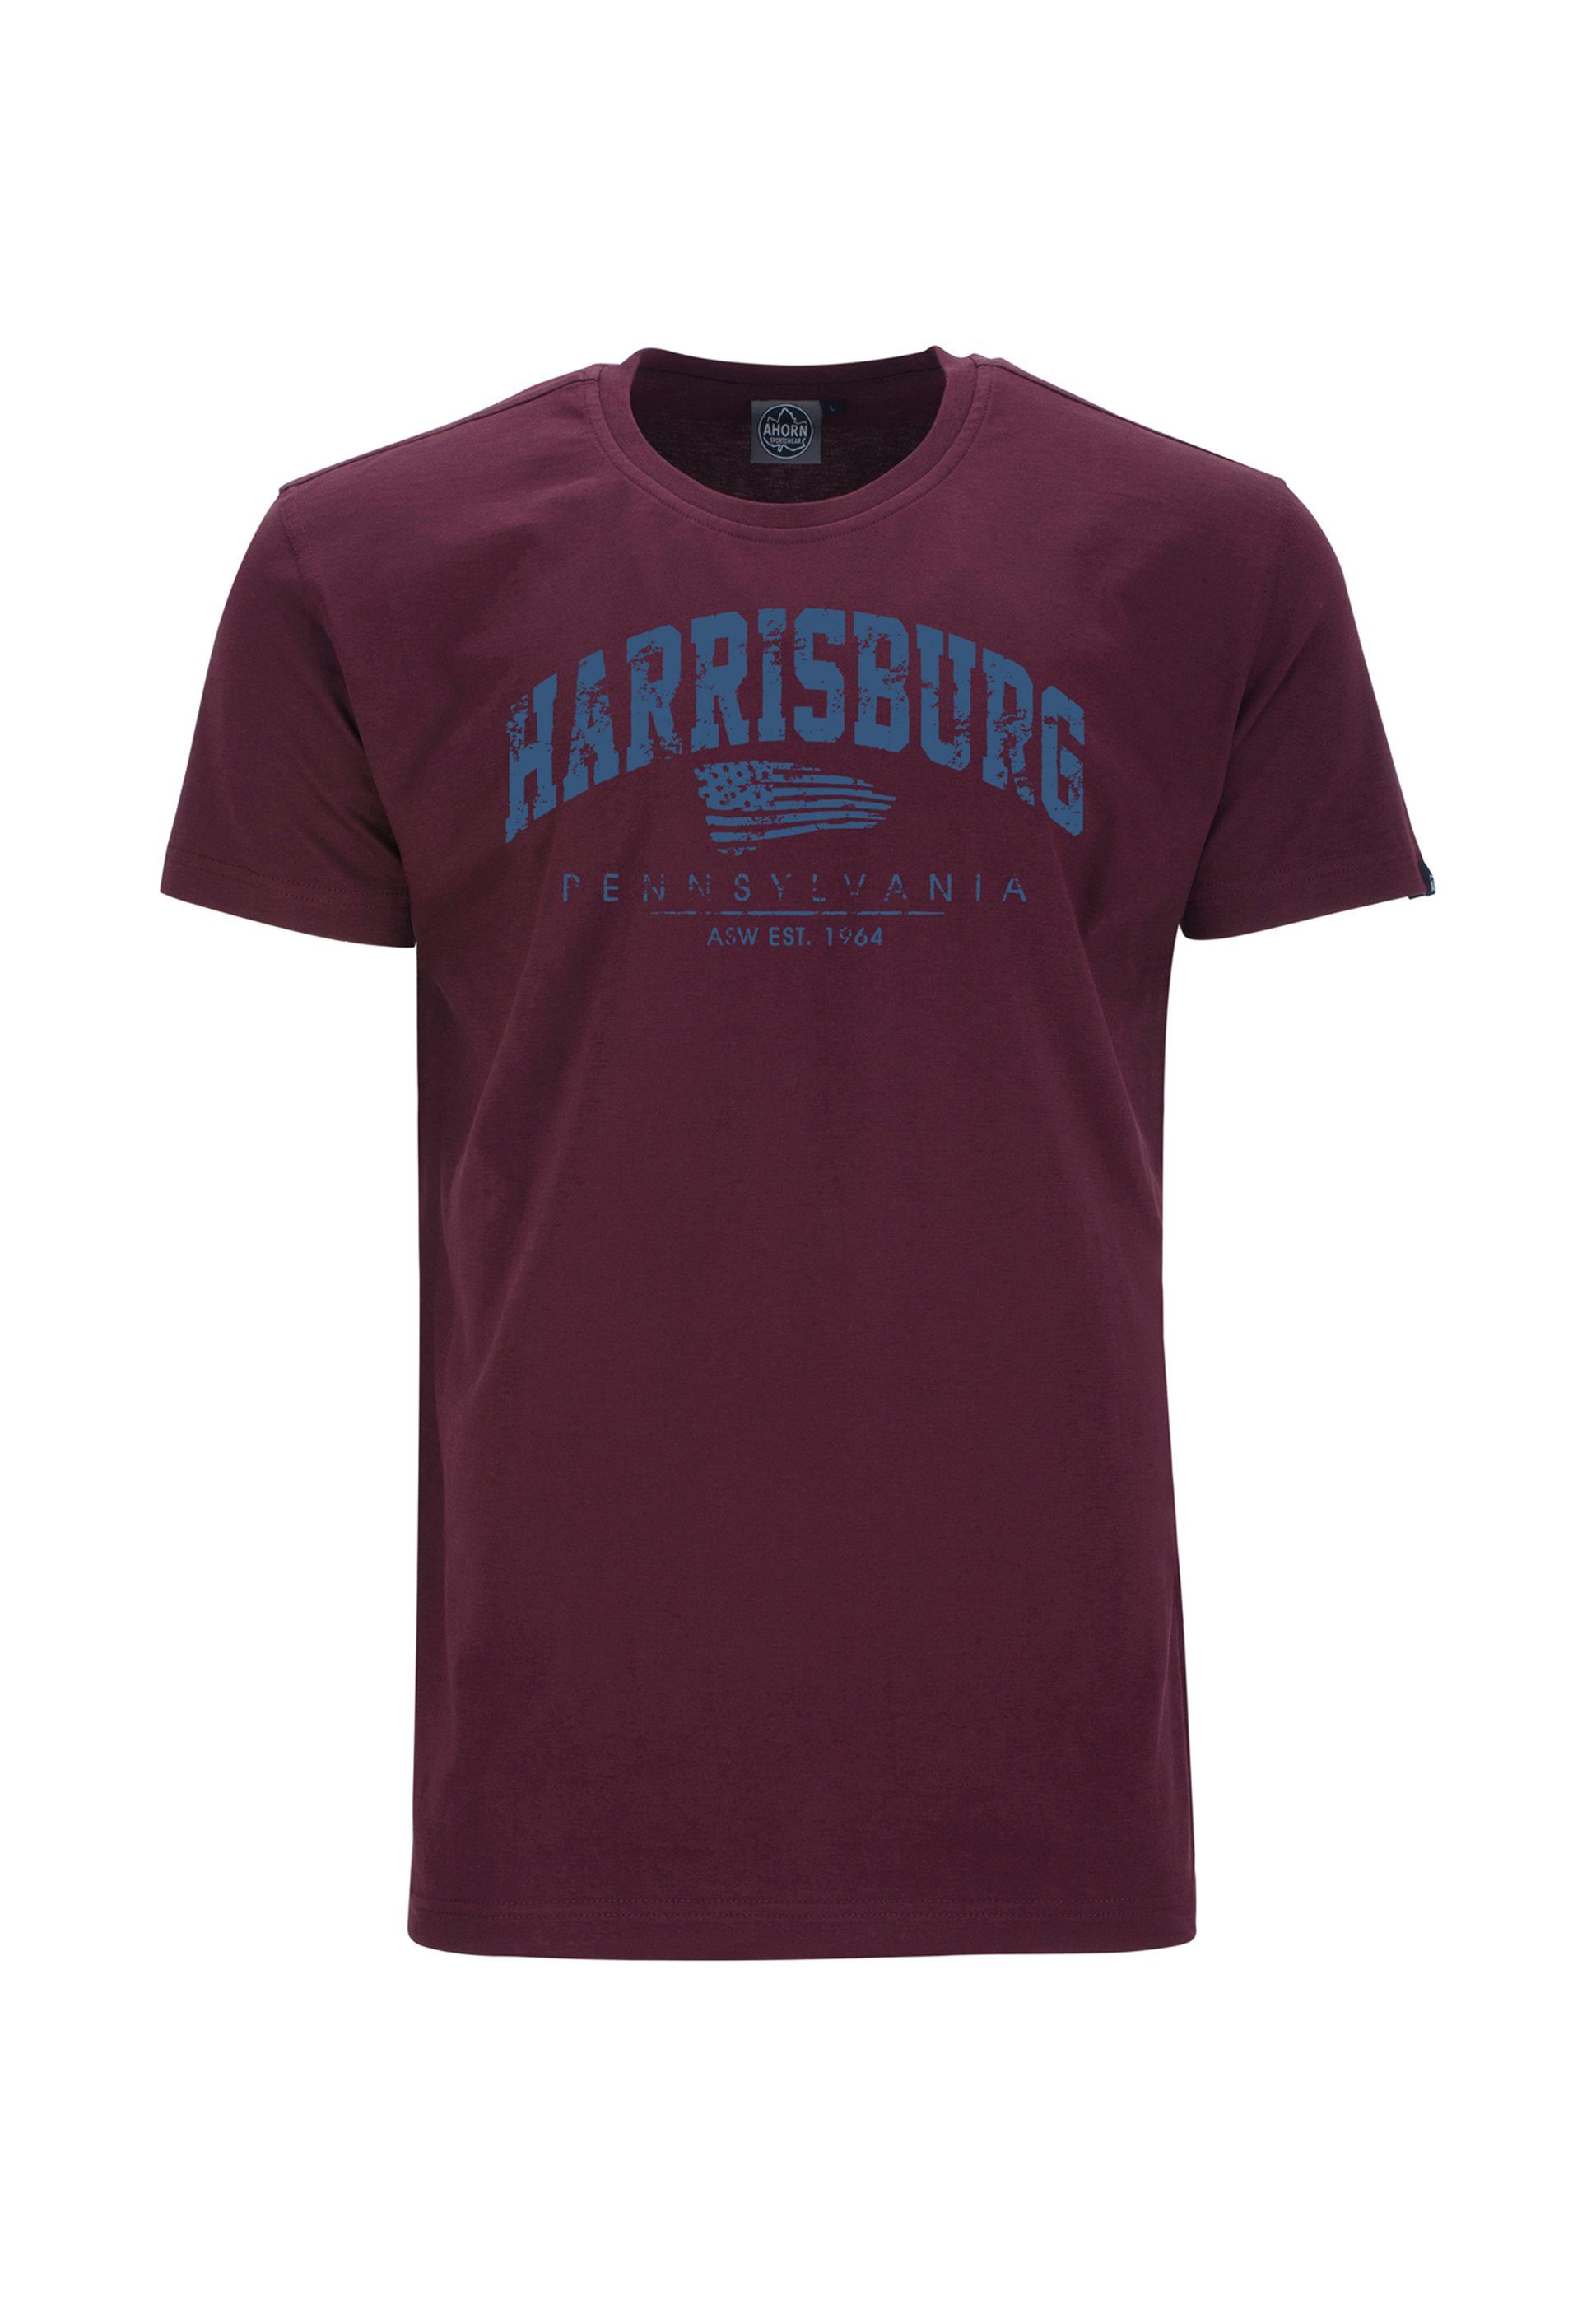 AHORN SPORTSWEAR T-Shirt HARRISBURG_ATLANTIC BLUE mit modischem Frontprint bordeaux